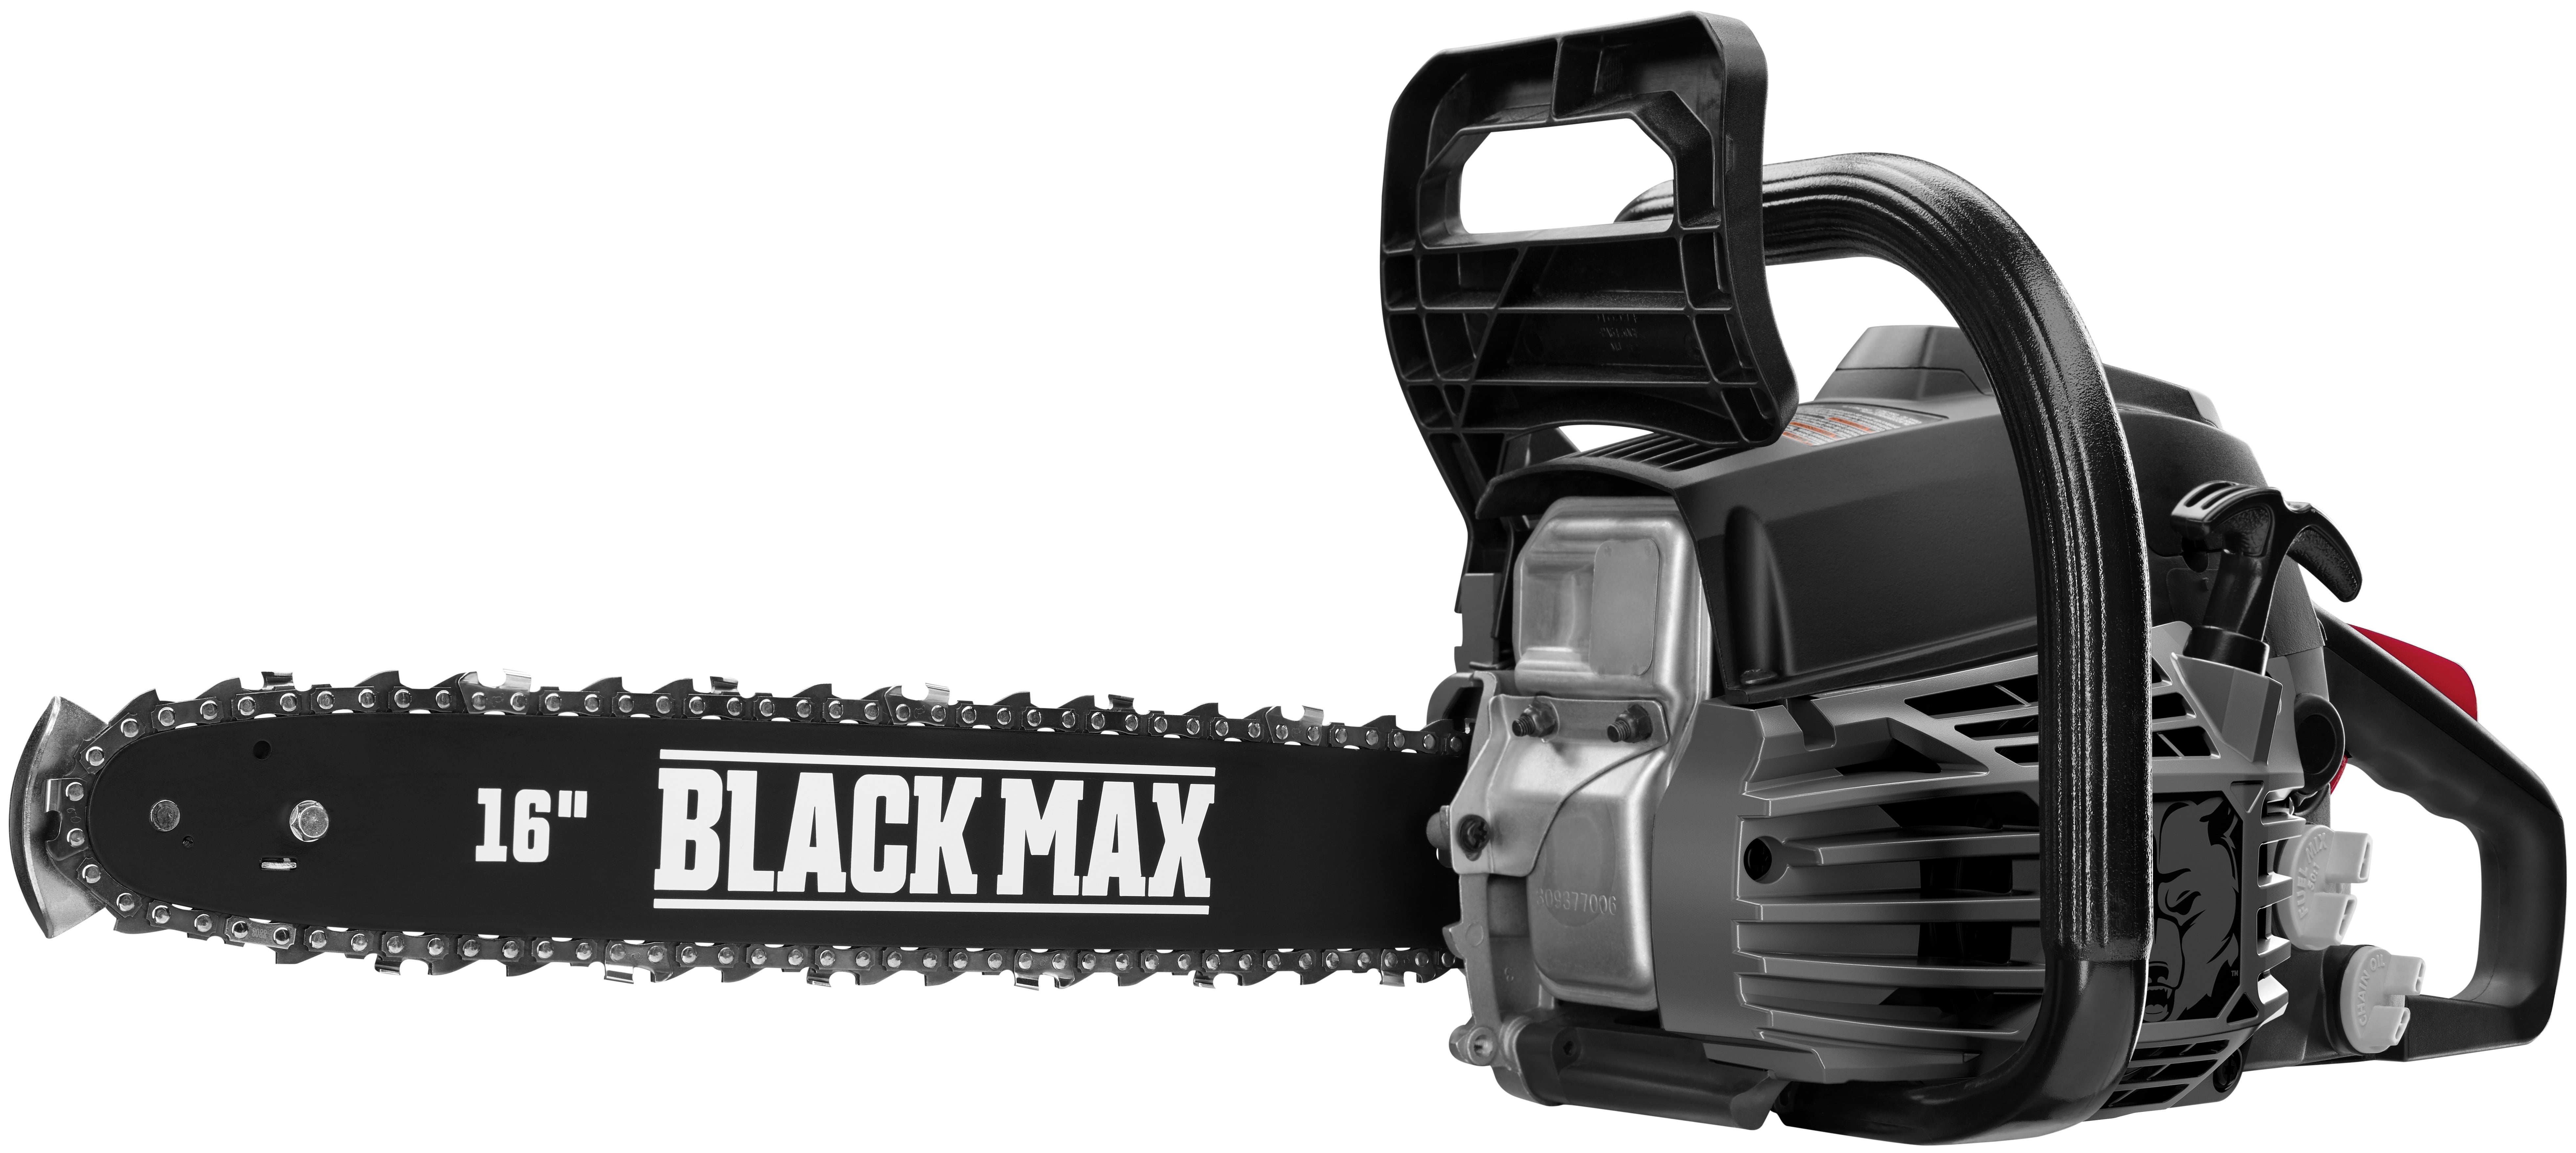 Black Max 16-inch Gas Chainsaw 38cc 2-Cycle Engine - 1